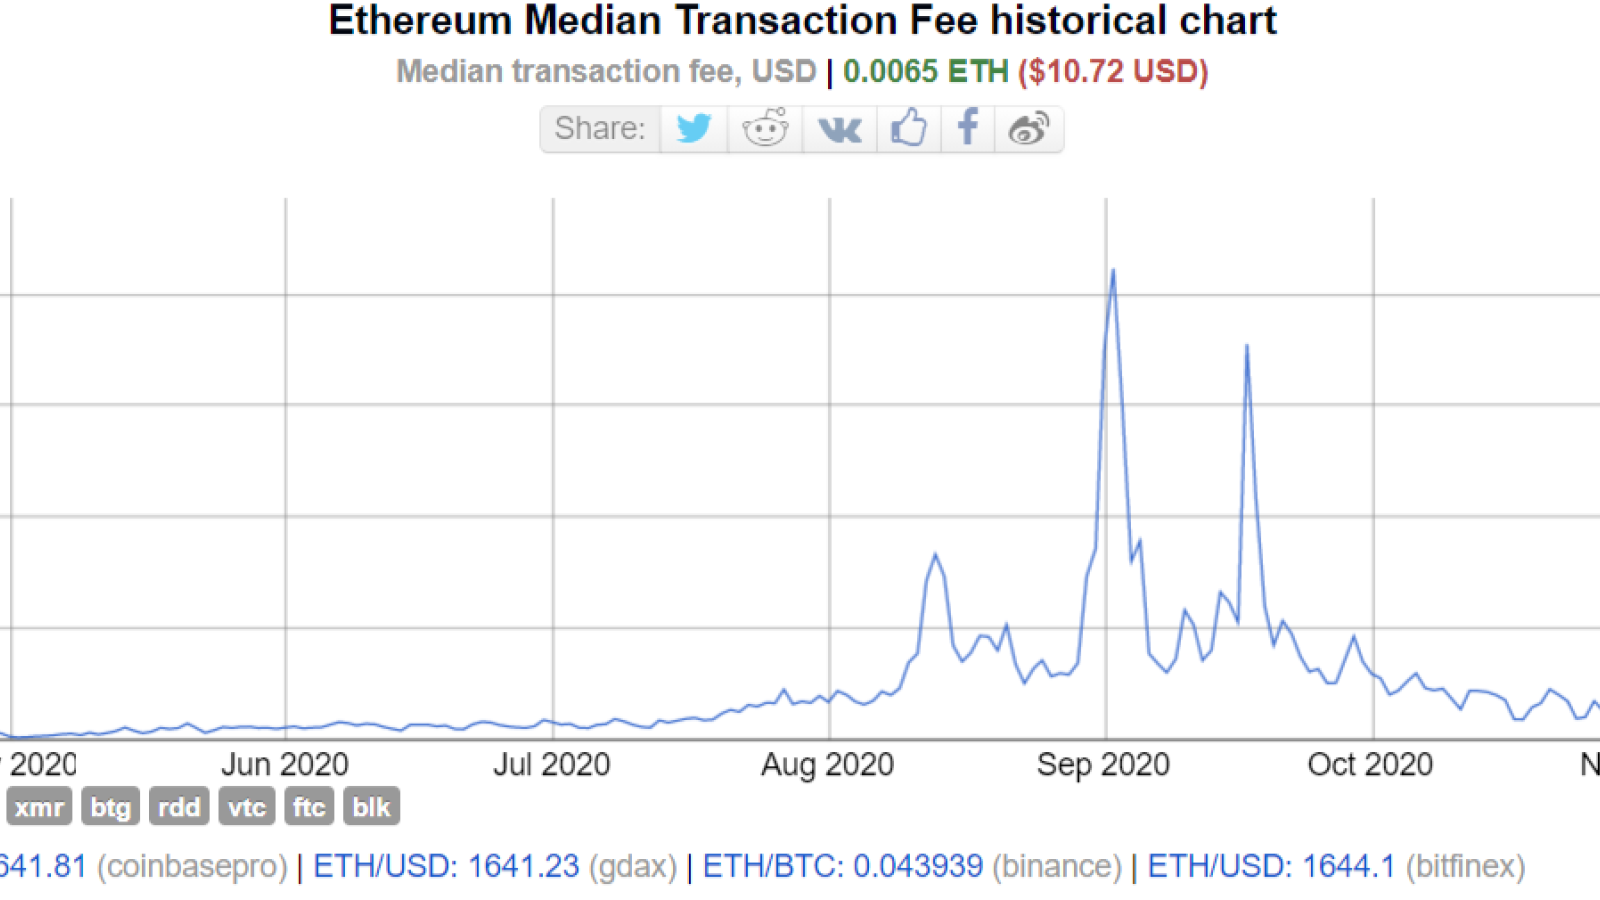 Ethereum (ETH) median transaction fees go through the roof